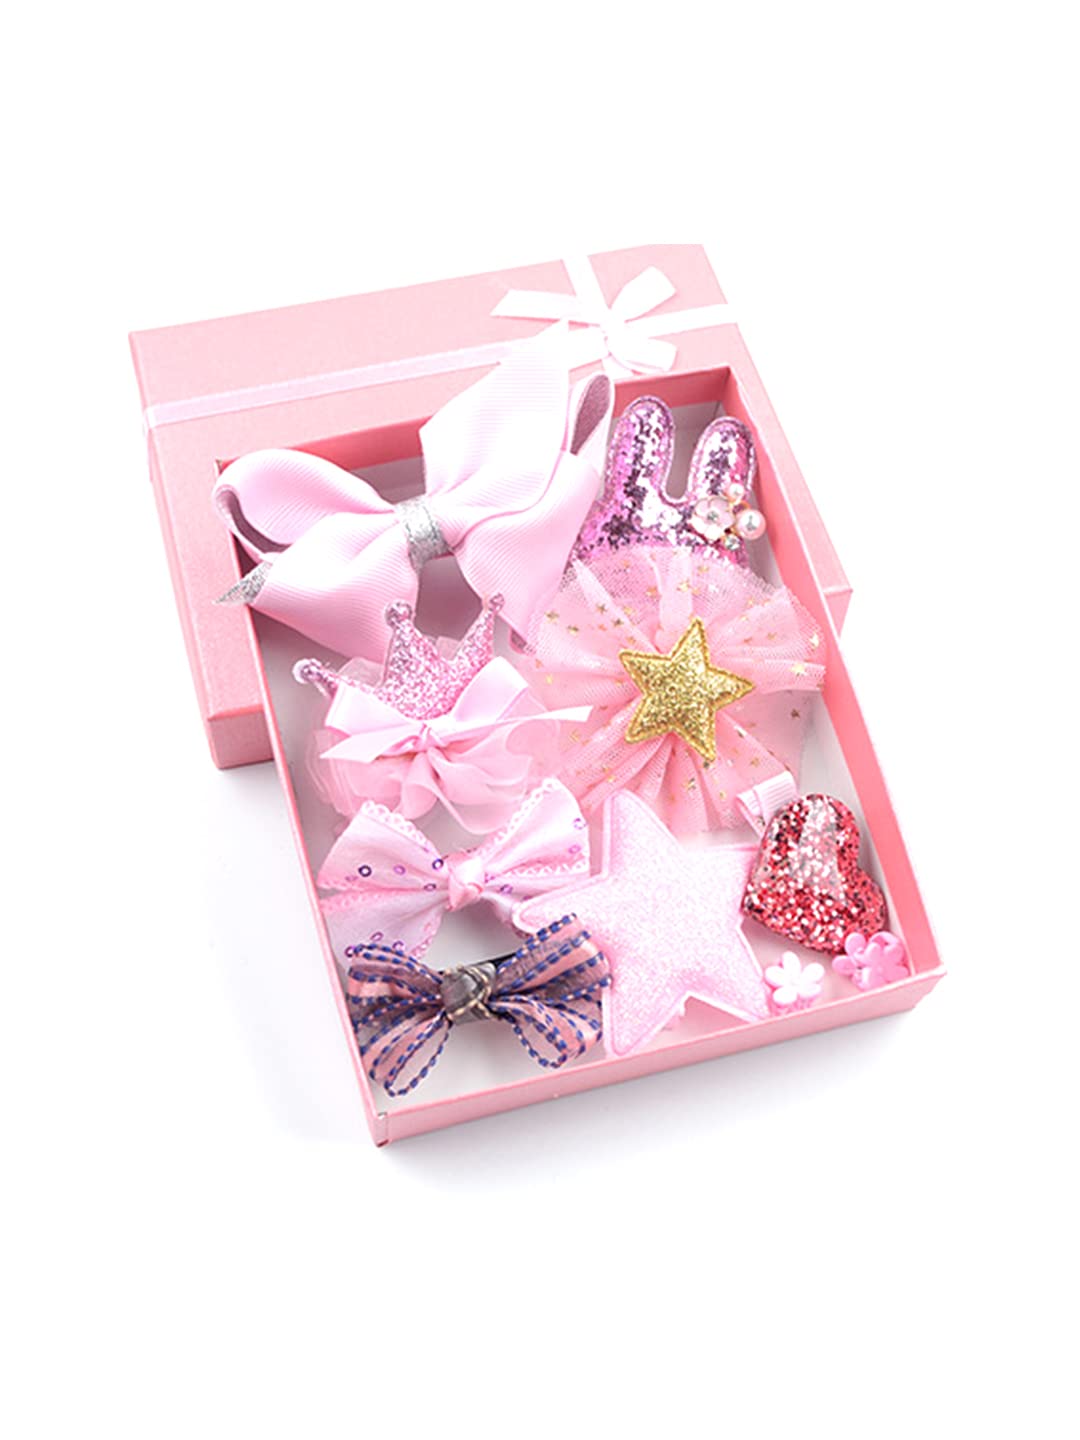 Girls hair accessories gift set - baby & kid stuff - by owner - household  sale - craigslist